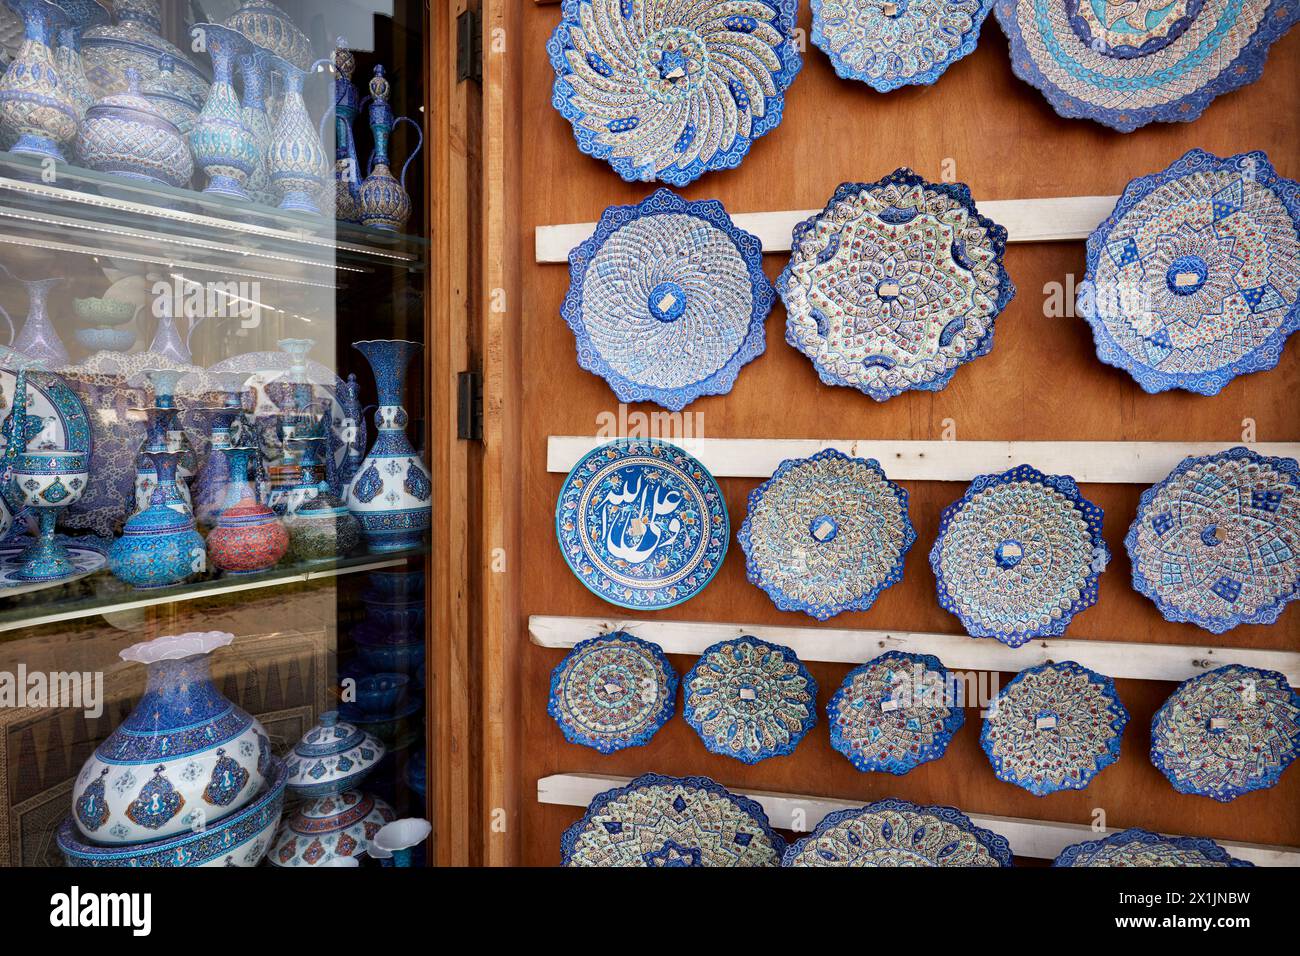 Minakari or Meenakari (Iranian of art of painting and enameling of metals or ceramics) plates displayed in a handicraft shop window. Isfahan, Iran. Stock Photo